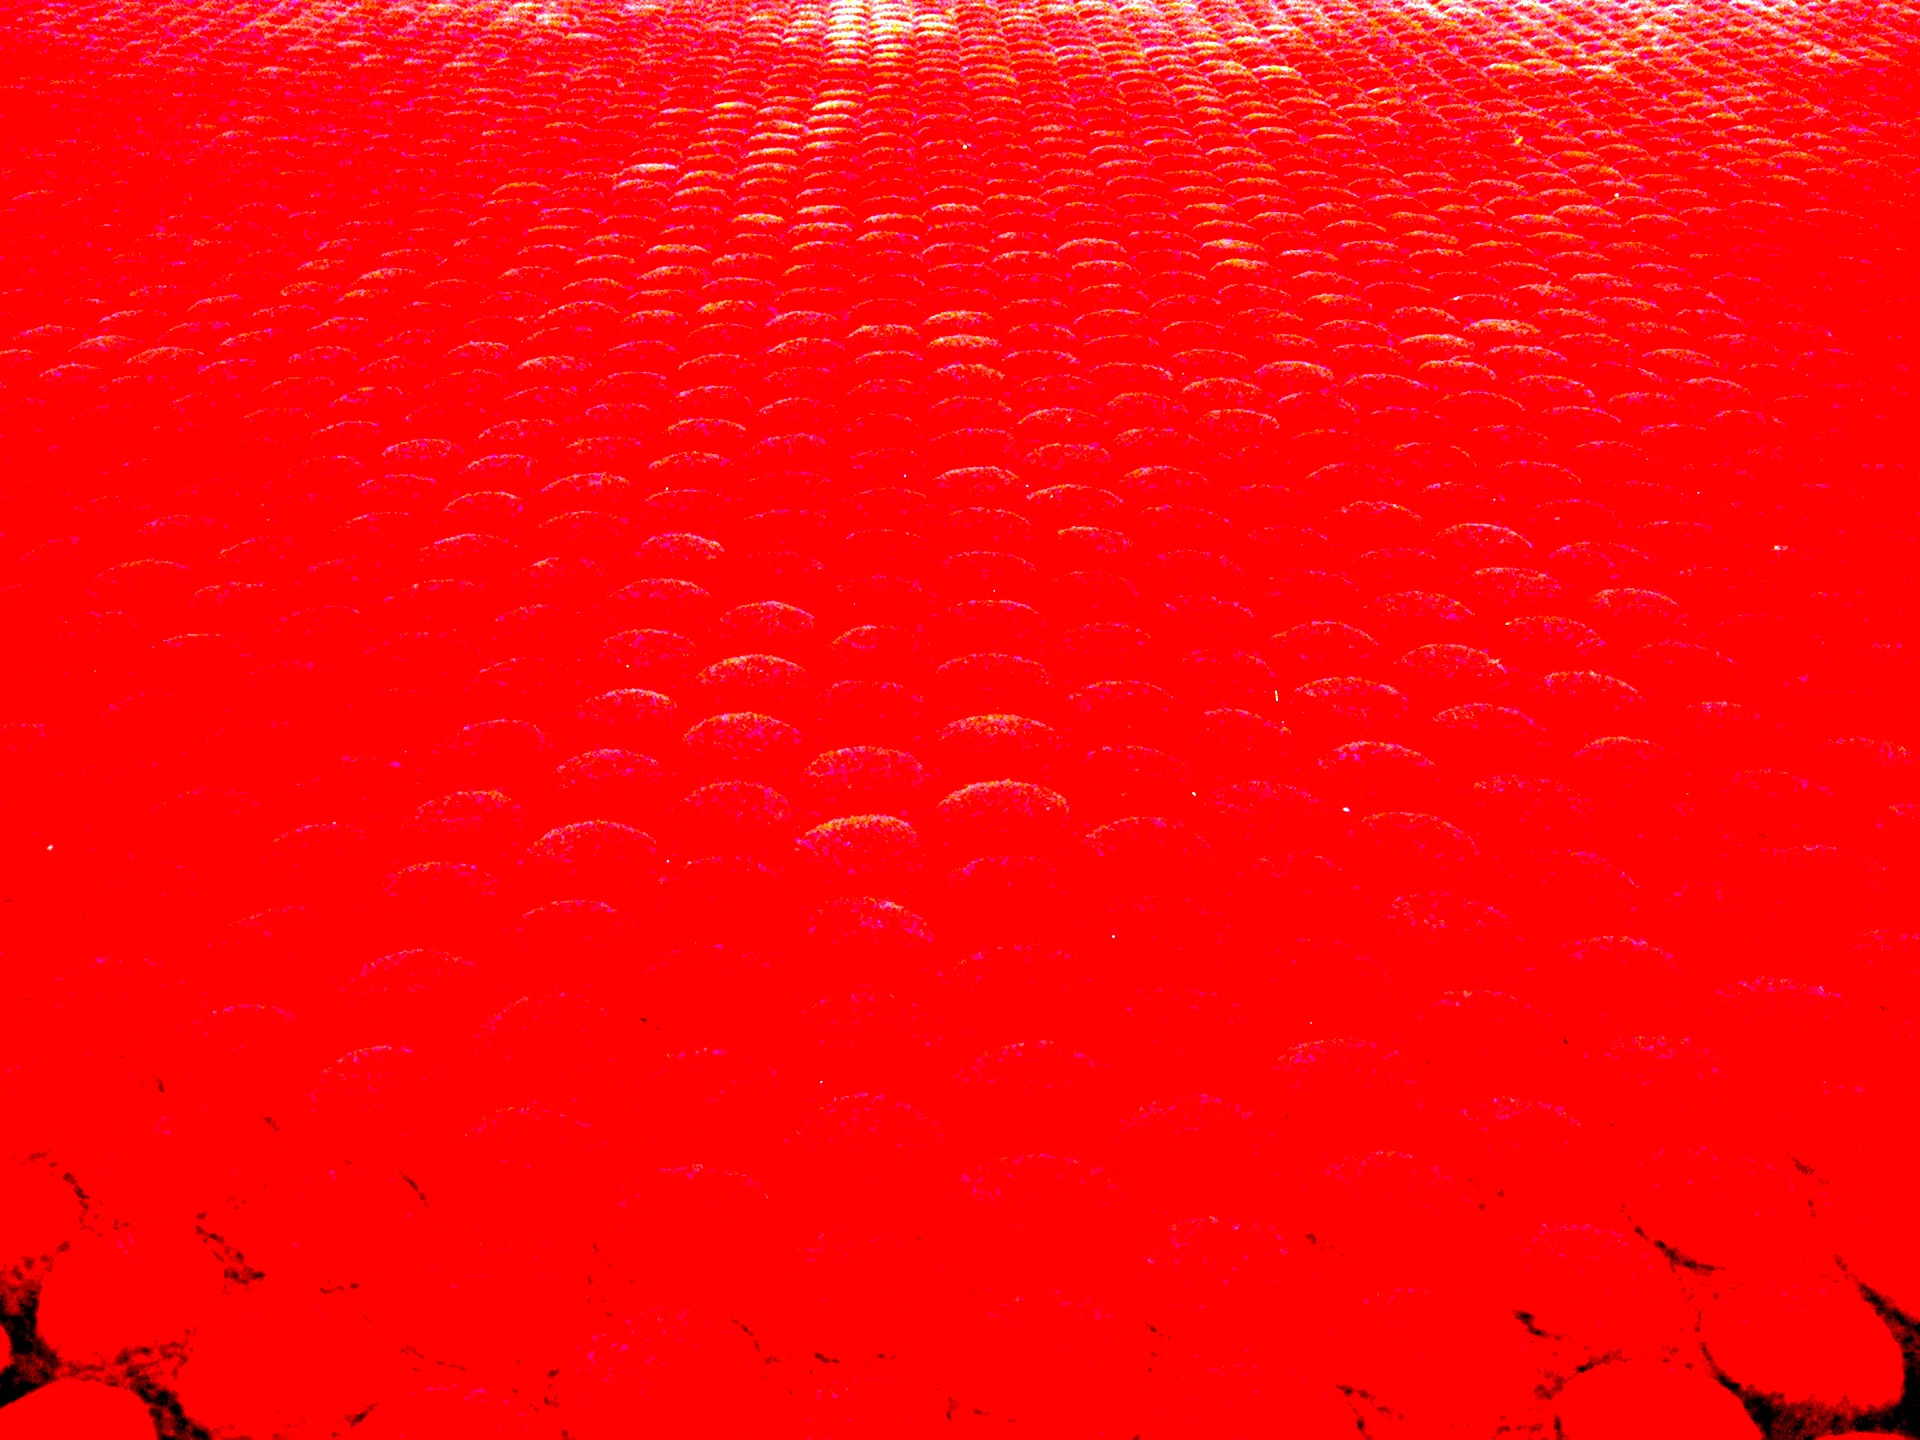 Red Carpet Floor texture